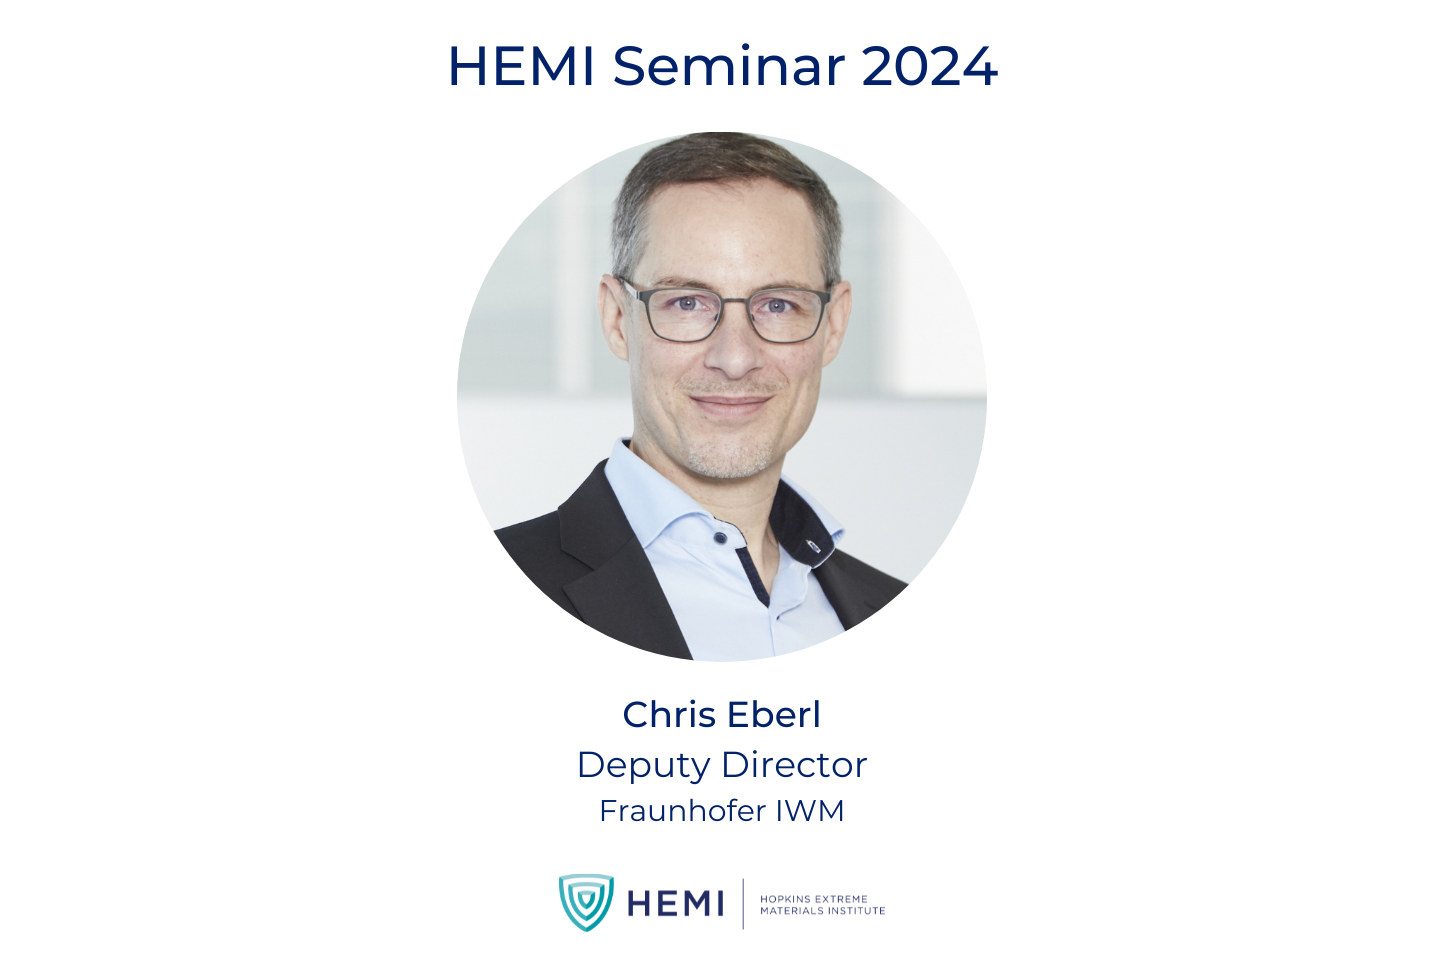 Headshot of Chris Eberl with HEMI logo and text: "HEMI Seminar 2024, Chris Eberl, Deputy Director, Frauhofer IWM"